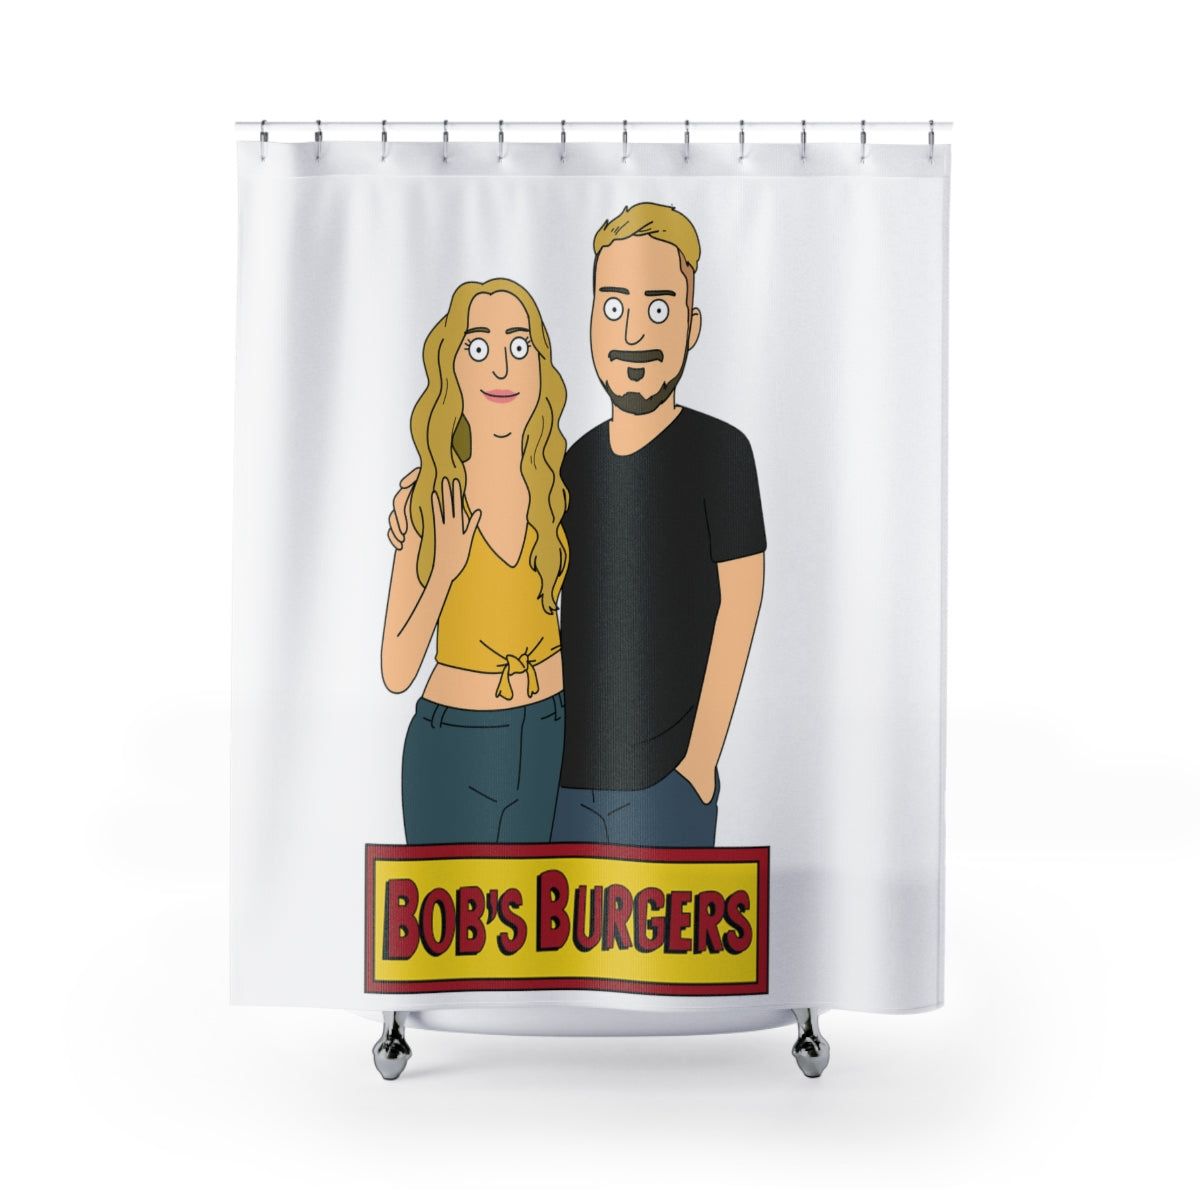 Personalized Shower Curtain - Just Like Bob Bob's Burgers